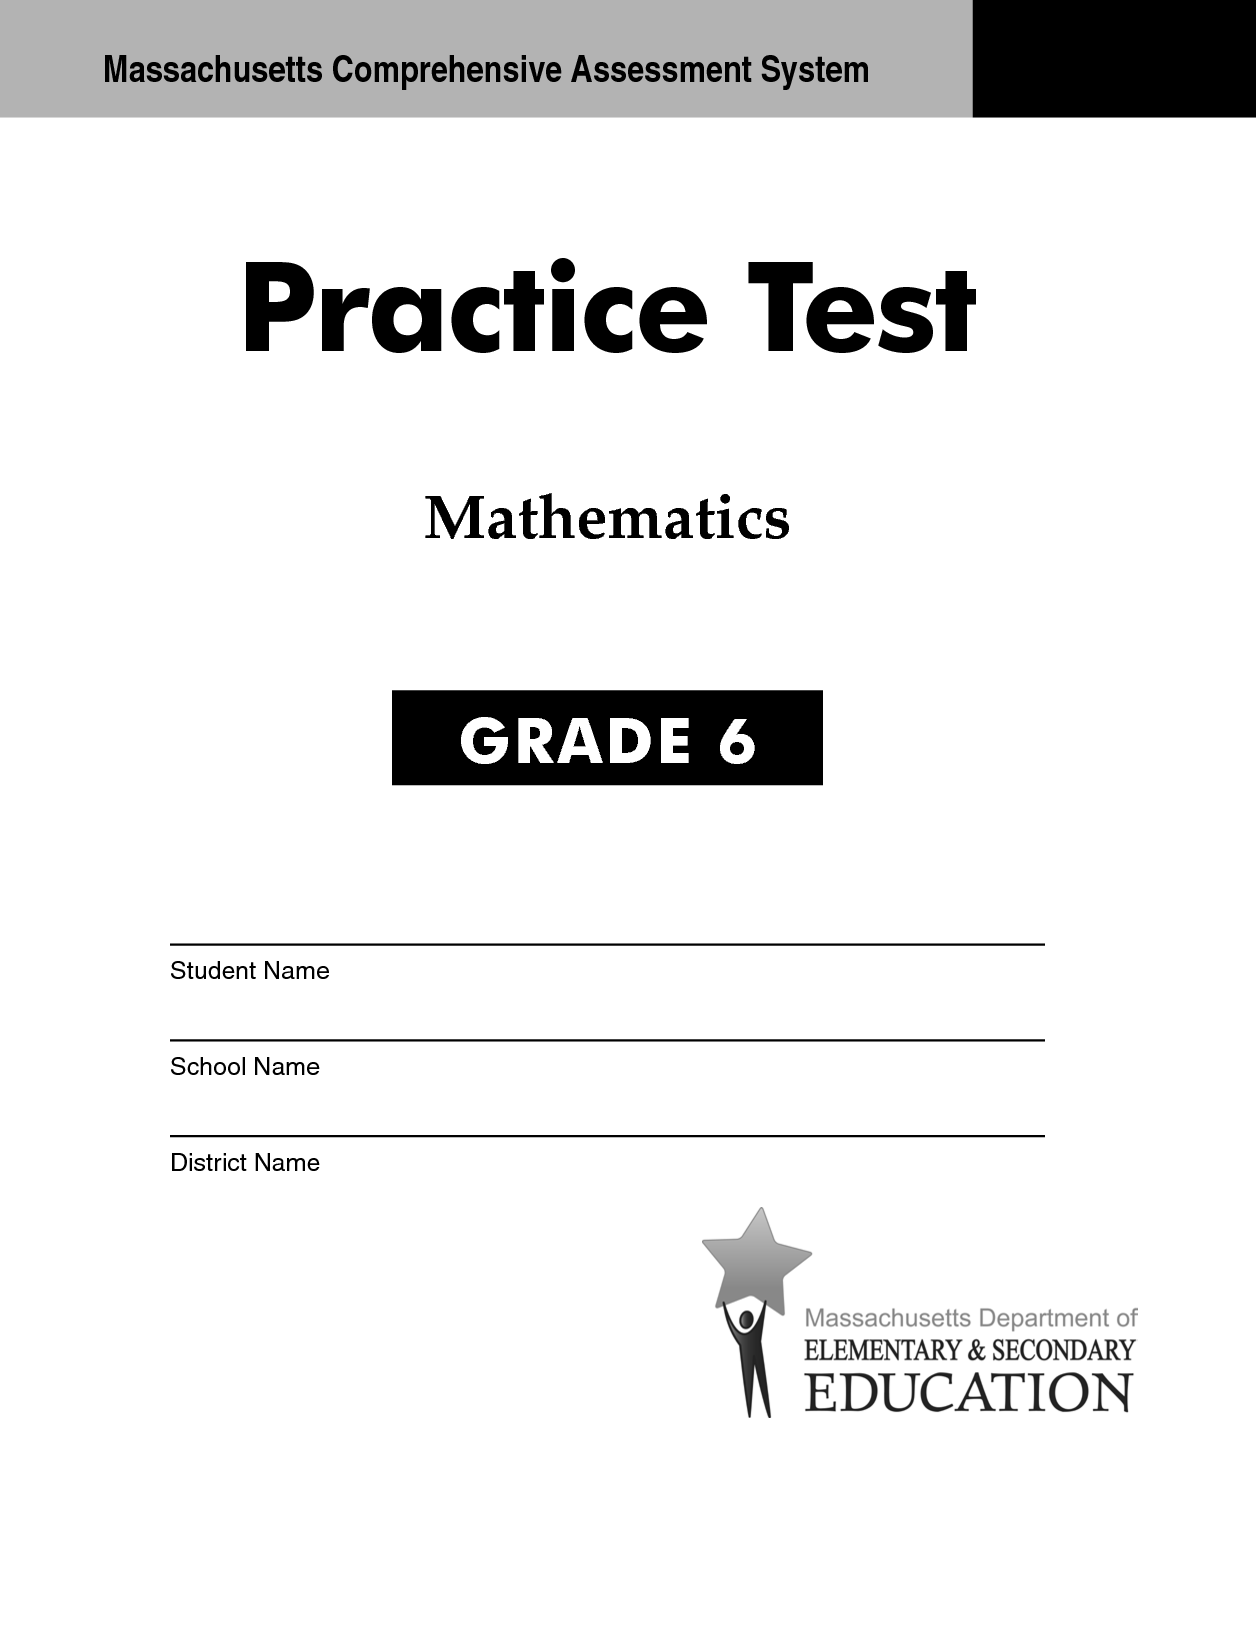 6th Grade Math Test Image